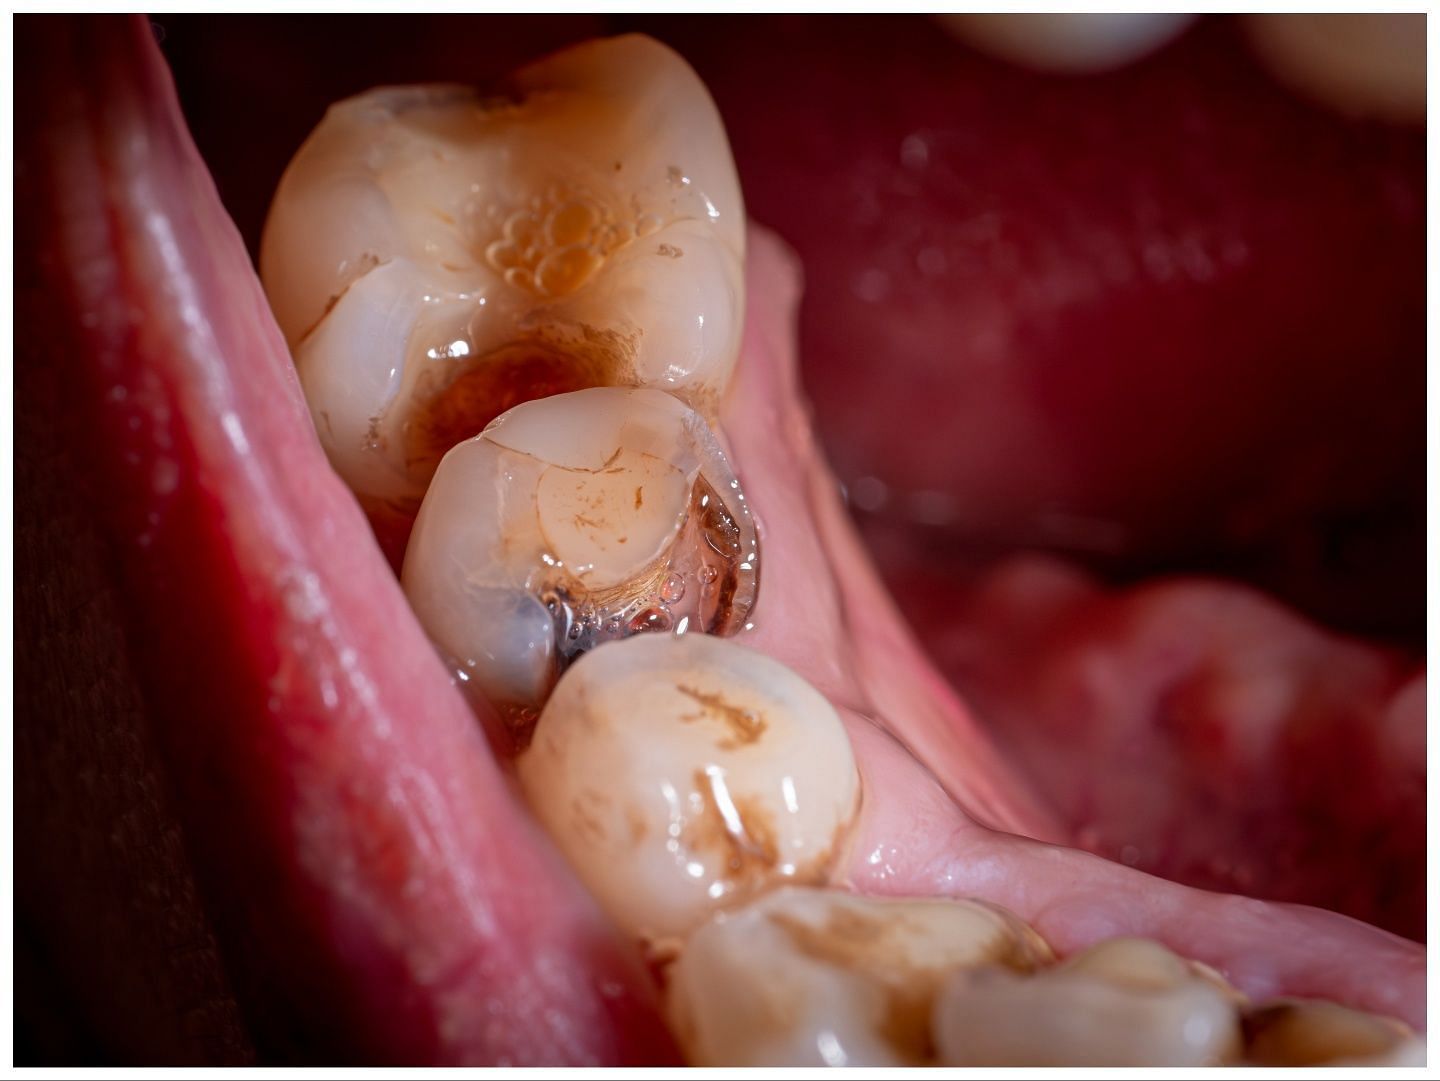 Teeth decay due to acid in soda (Image via Vecteezy)